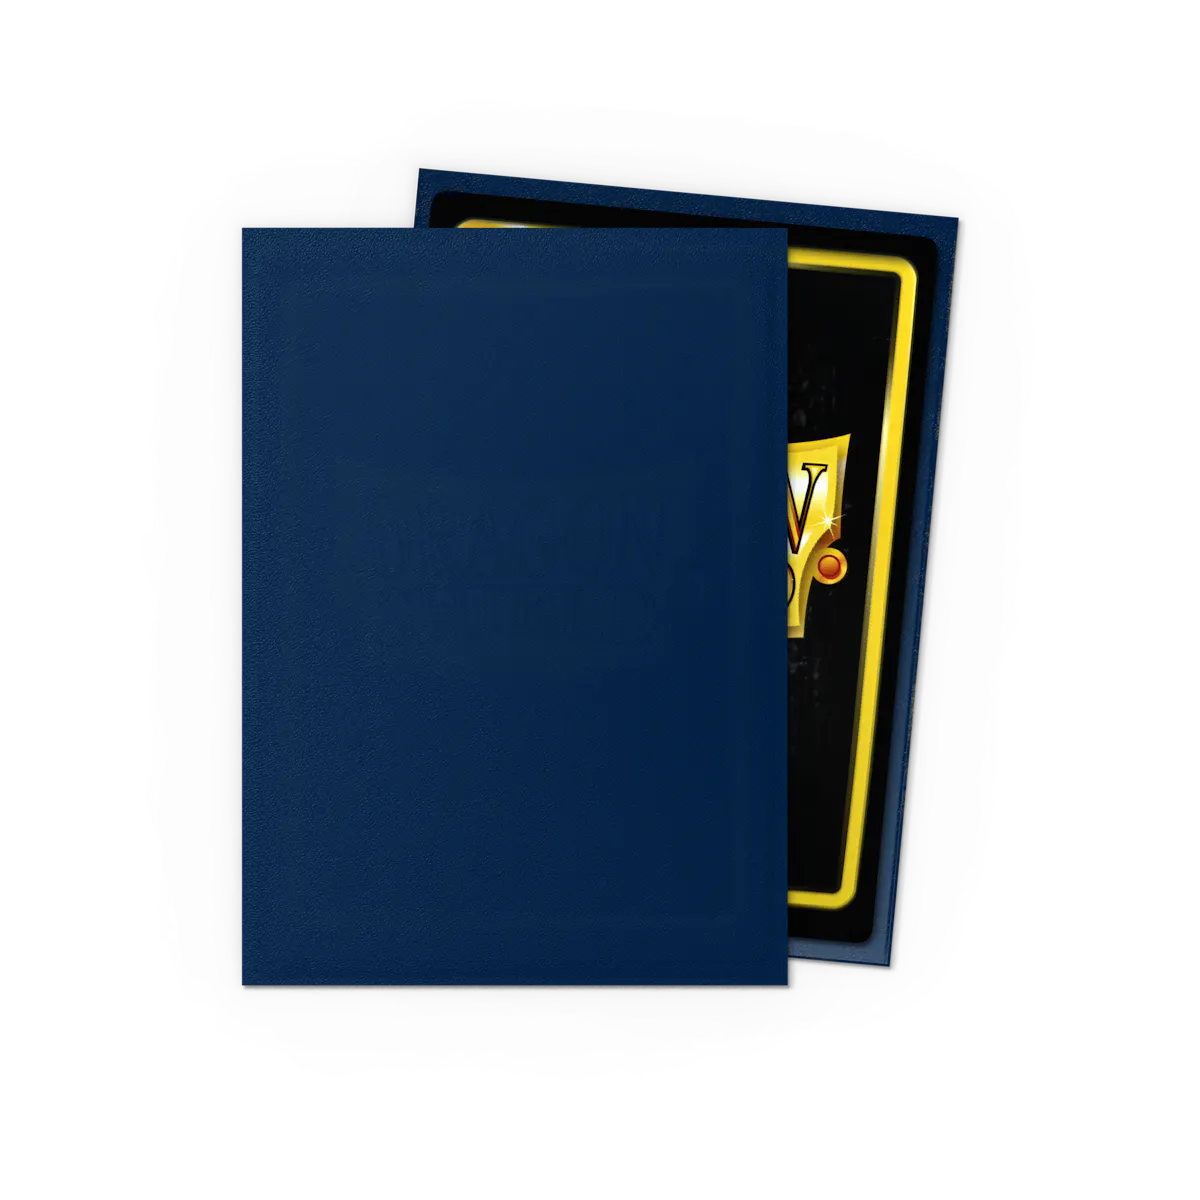 Dragon Shield - Matte Sleeves - Standard Size - 100pk - Midnight Blue